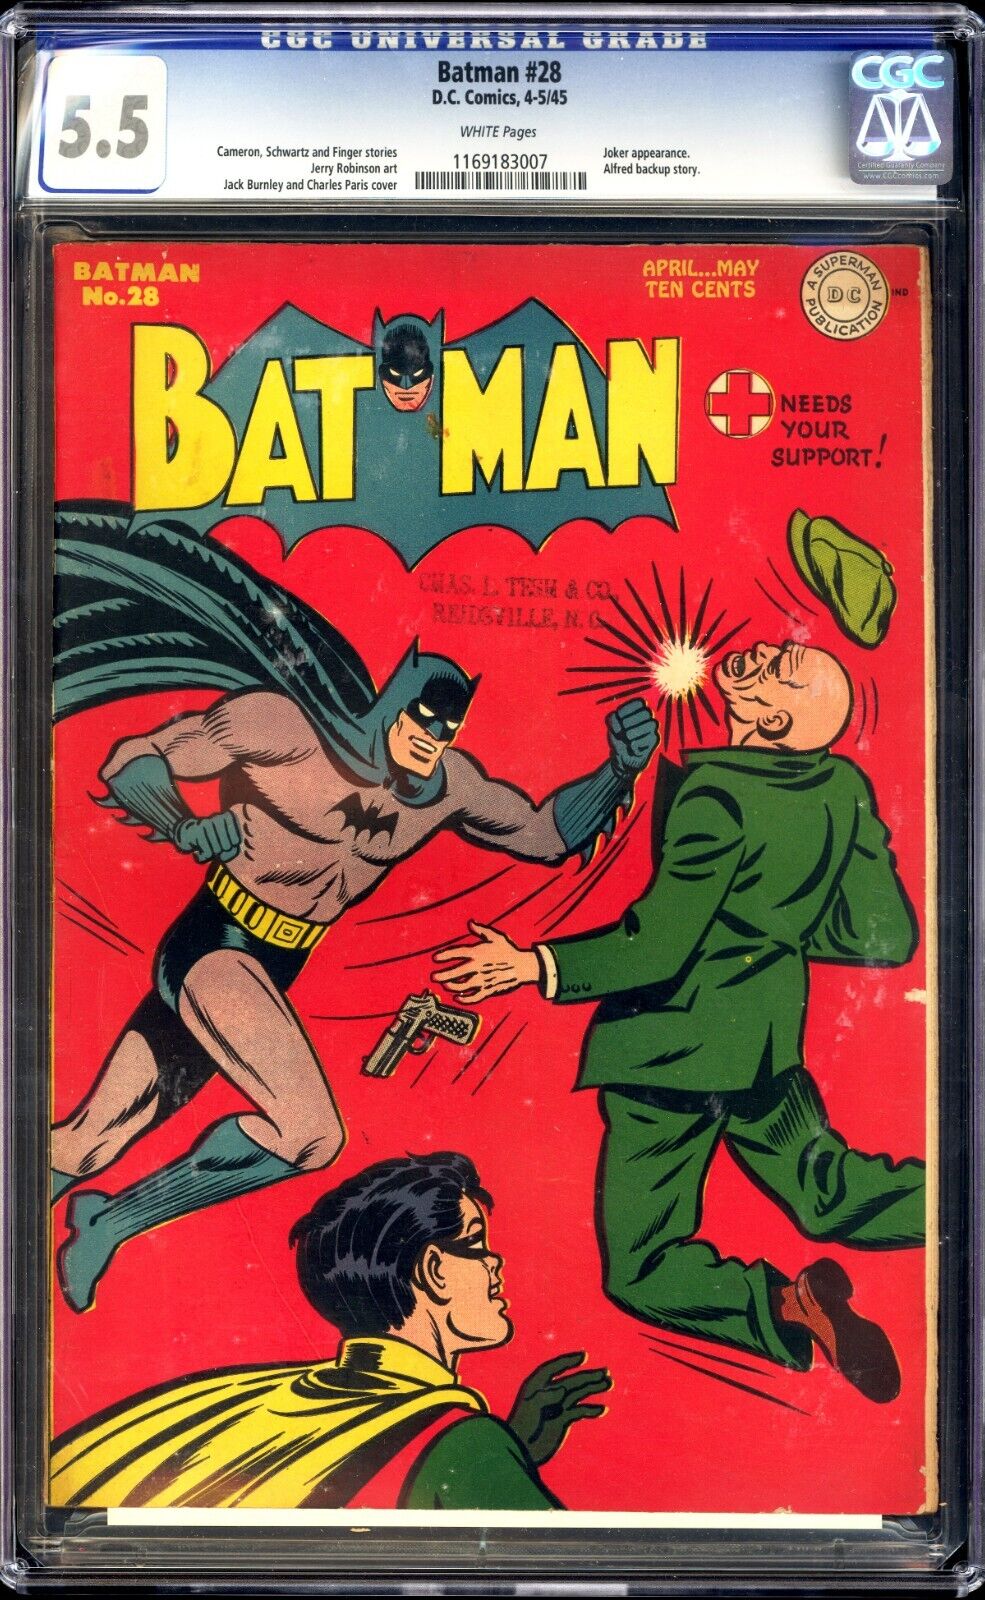 DC Batman #28 CGC 5.5 White Pages 1945 - Golden Age Joker Appearance